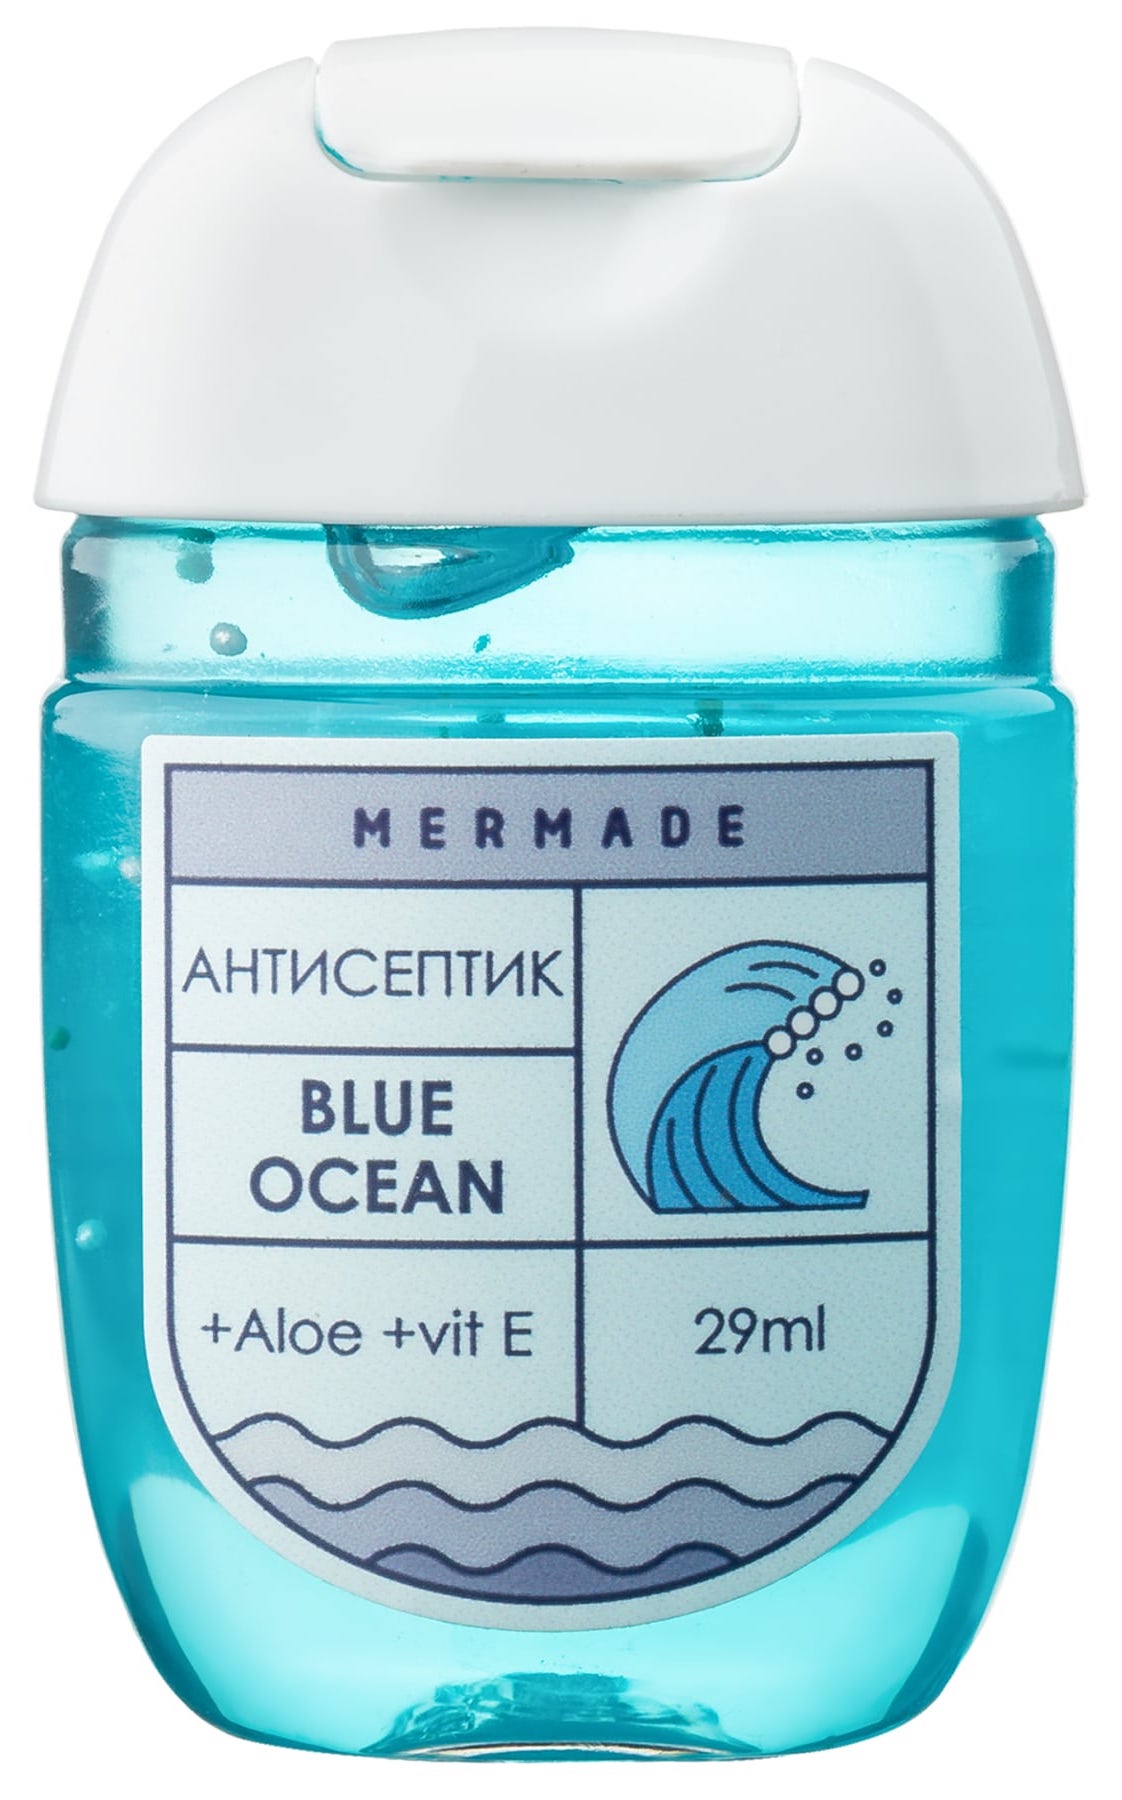 Антисептик MERMADE Blue Ocean (Тропики) 29мл в Киеве